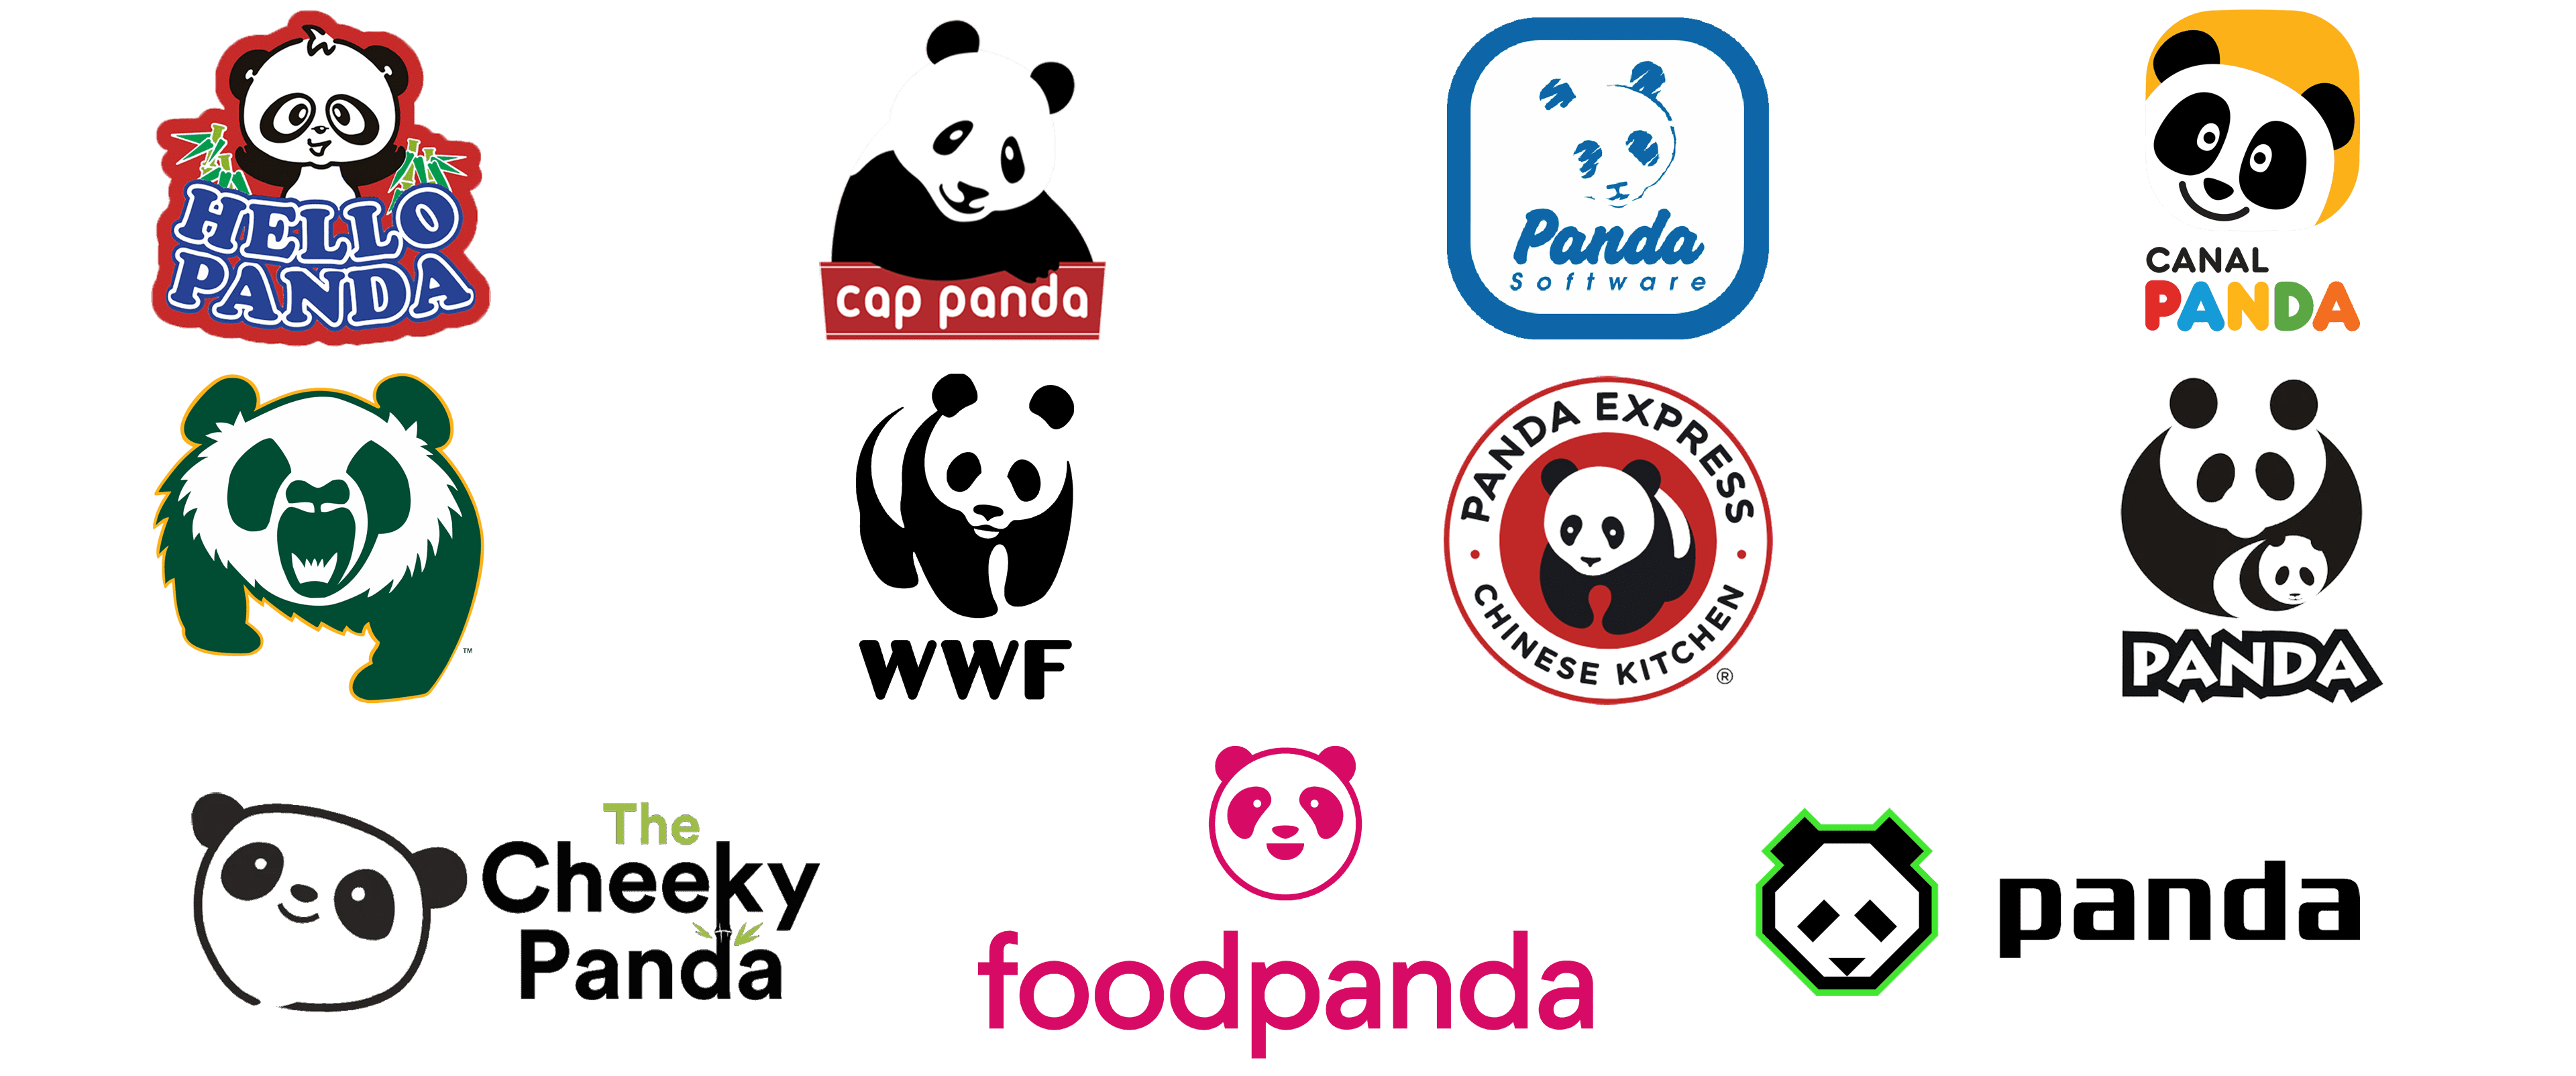 panda express mascot